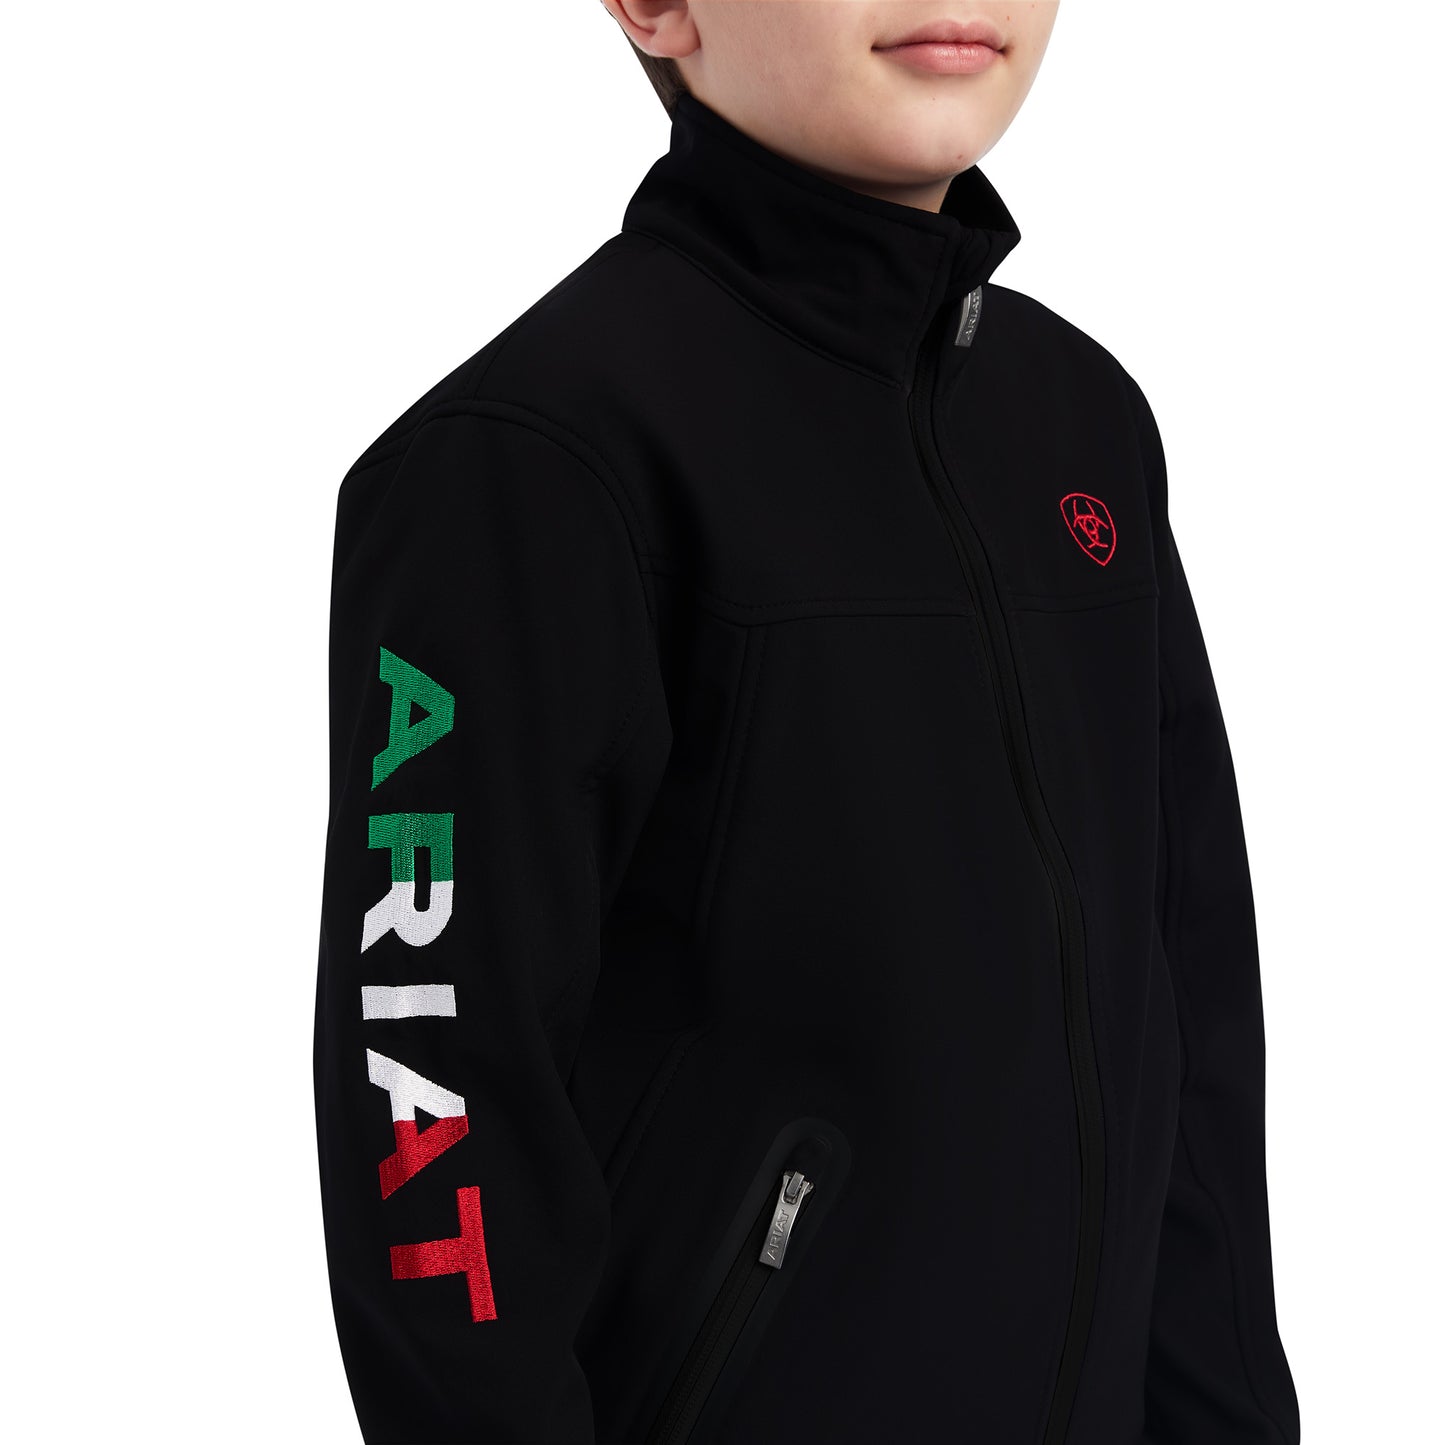 Ariat Kids New Mexico Team Softshell Brand Jacket